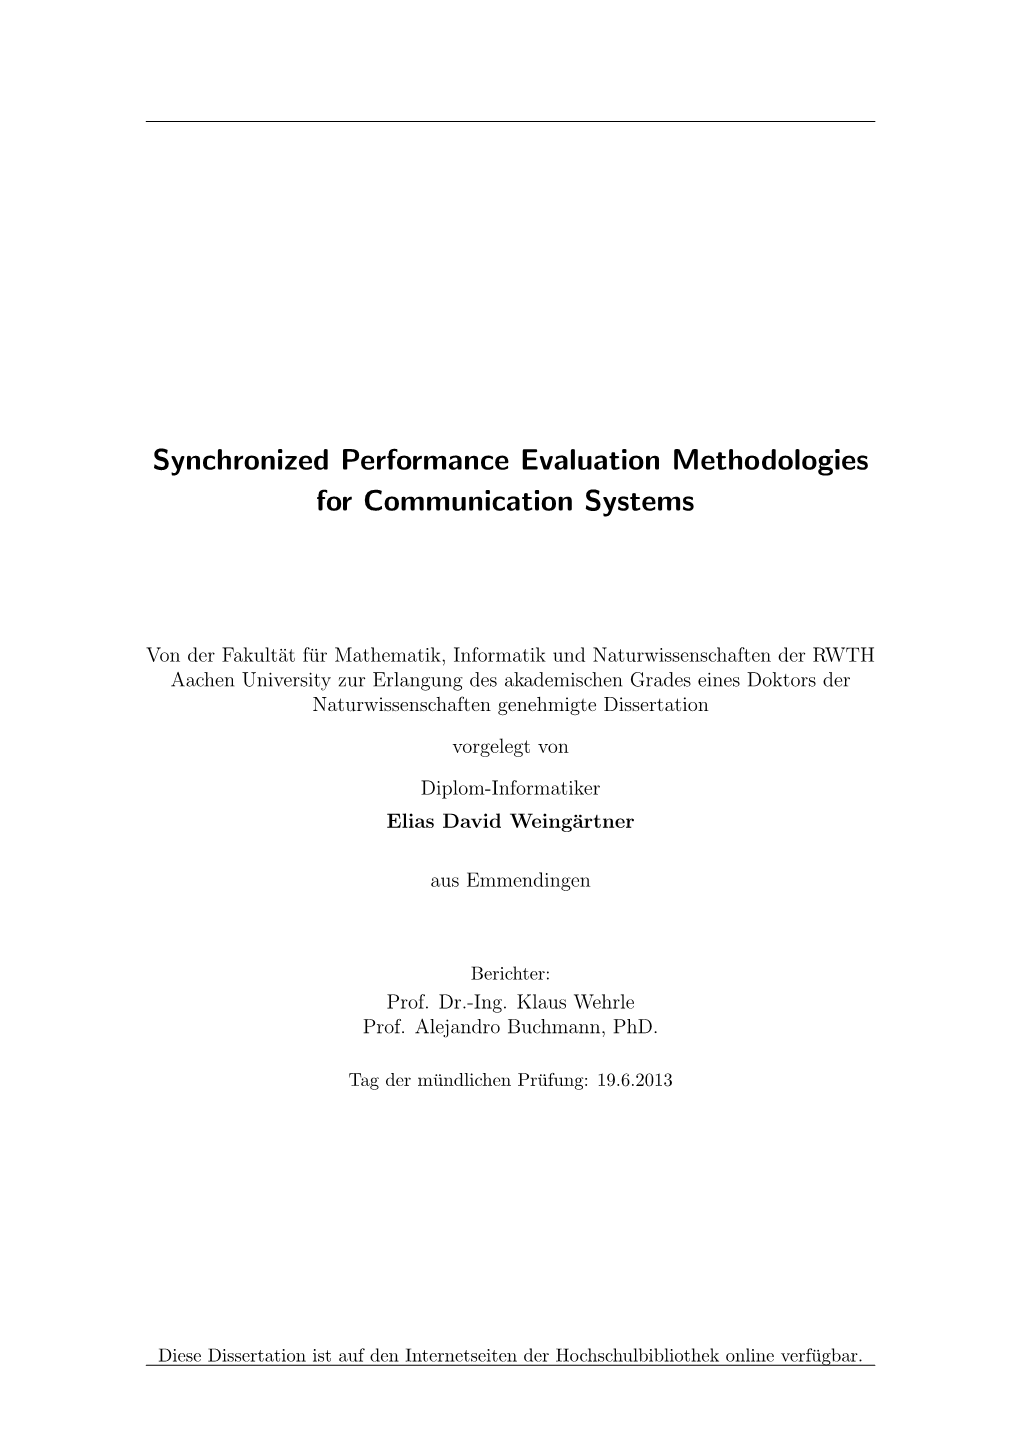 Synchronized Performance Evaluation Methodologies for Communication Systems